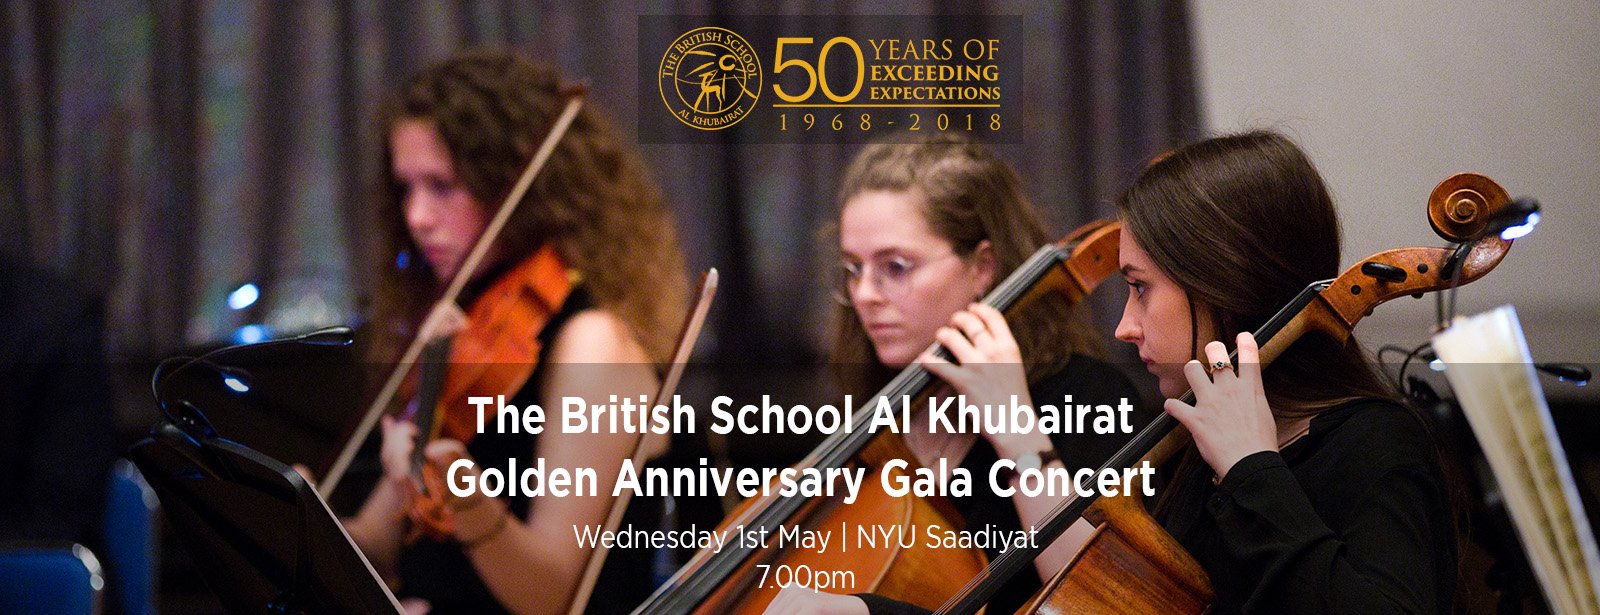 The British School Al Khubairat Golden Anniversary Gala Concert - Coming Soon in UAE